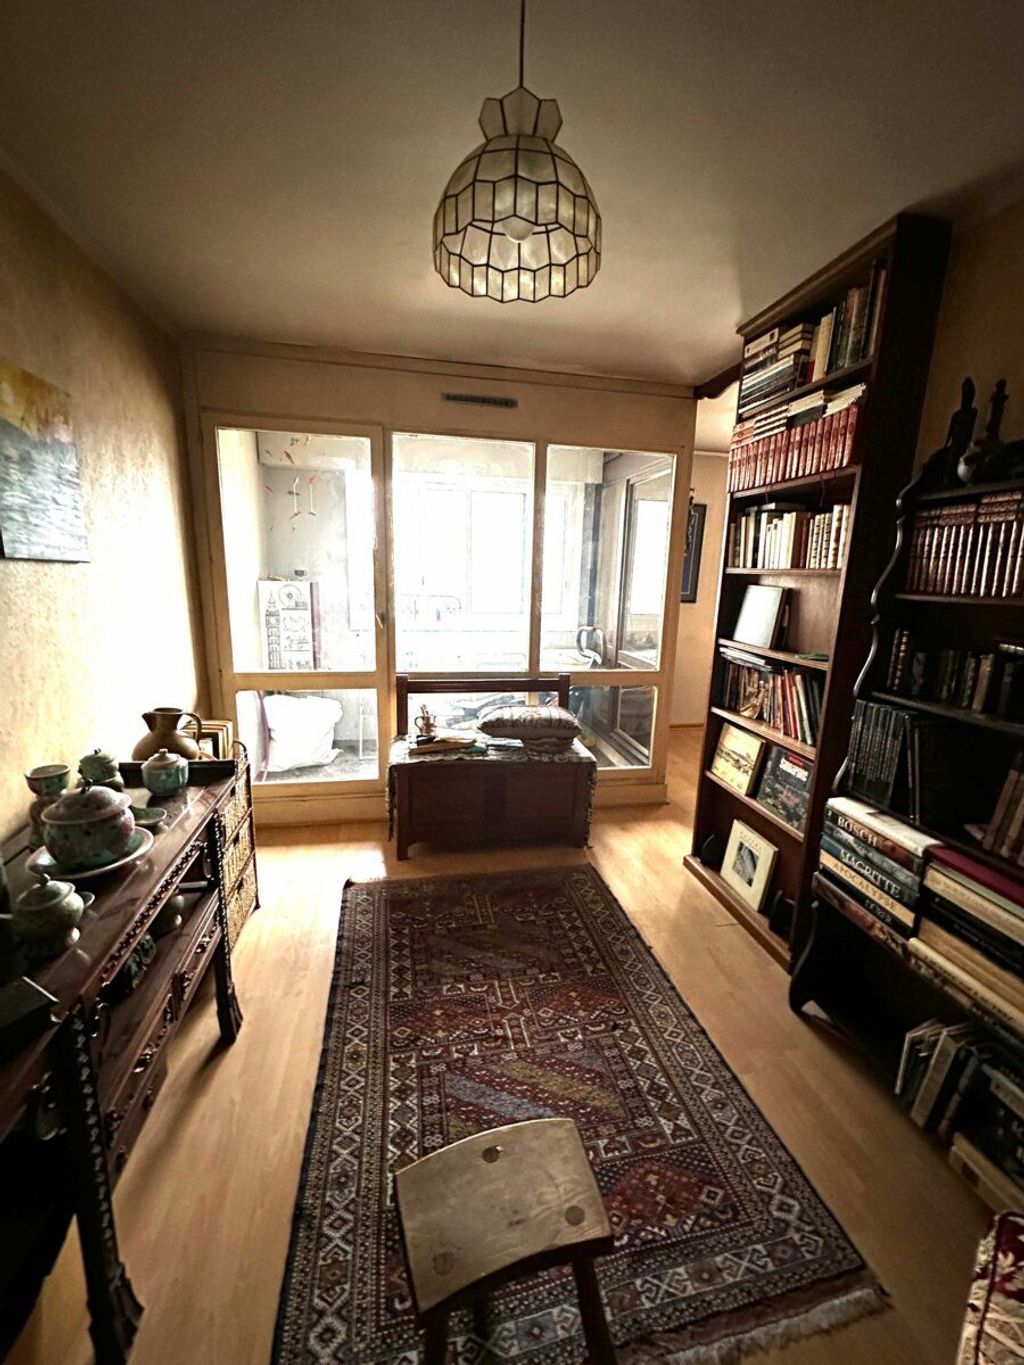 Achat appartement 4 pièce(s) Vitry-sur-Seine